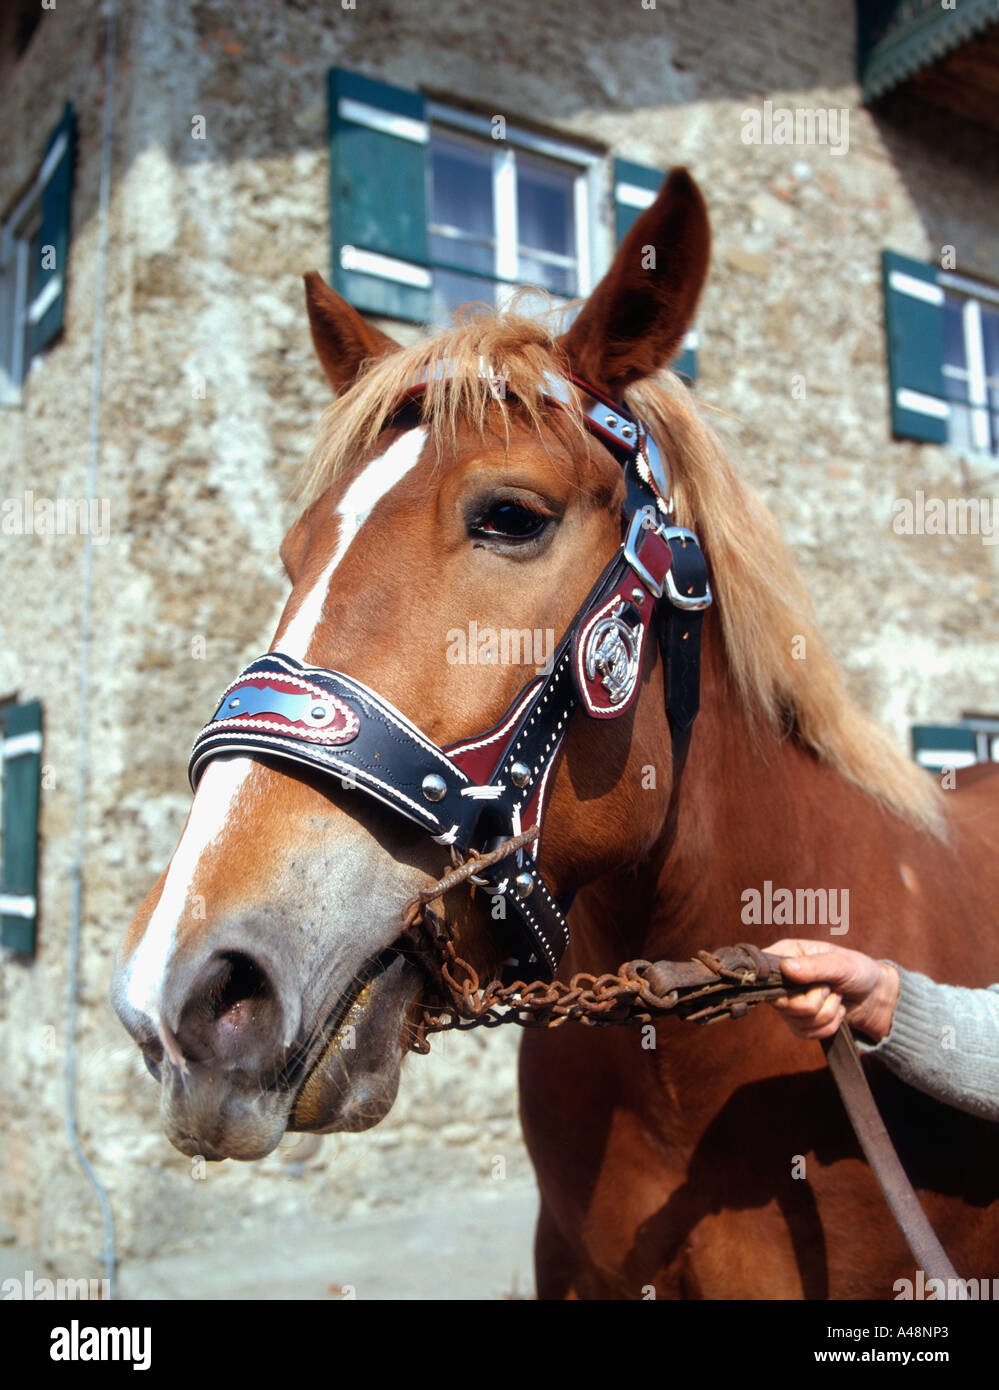 Draught Horse / Draft Horse Stock Photo